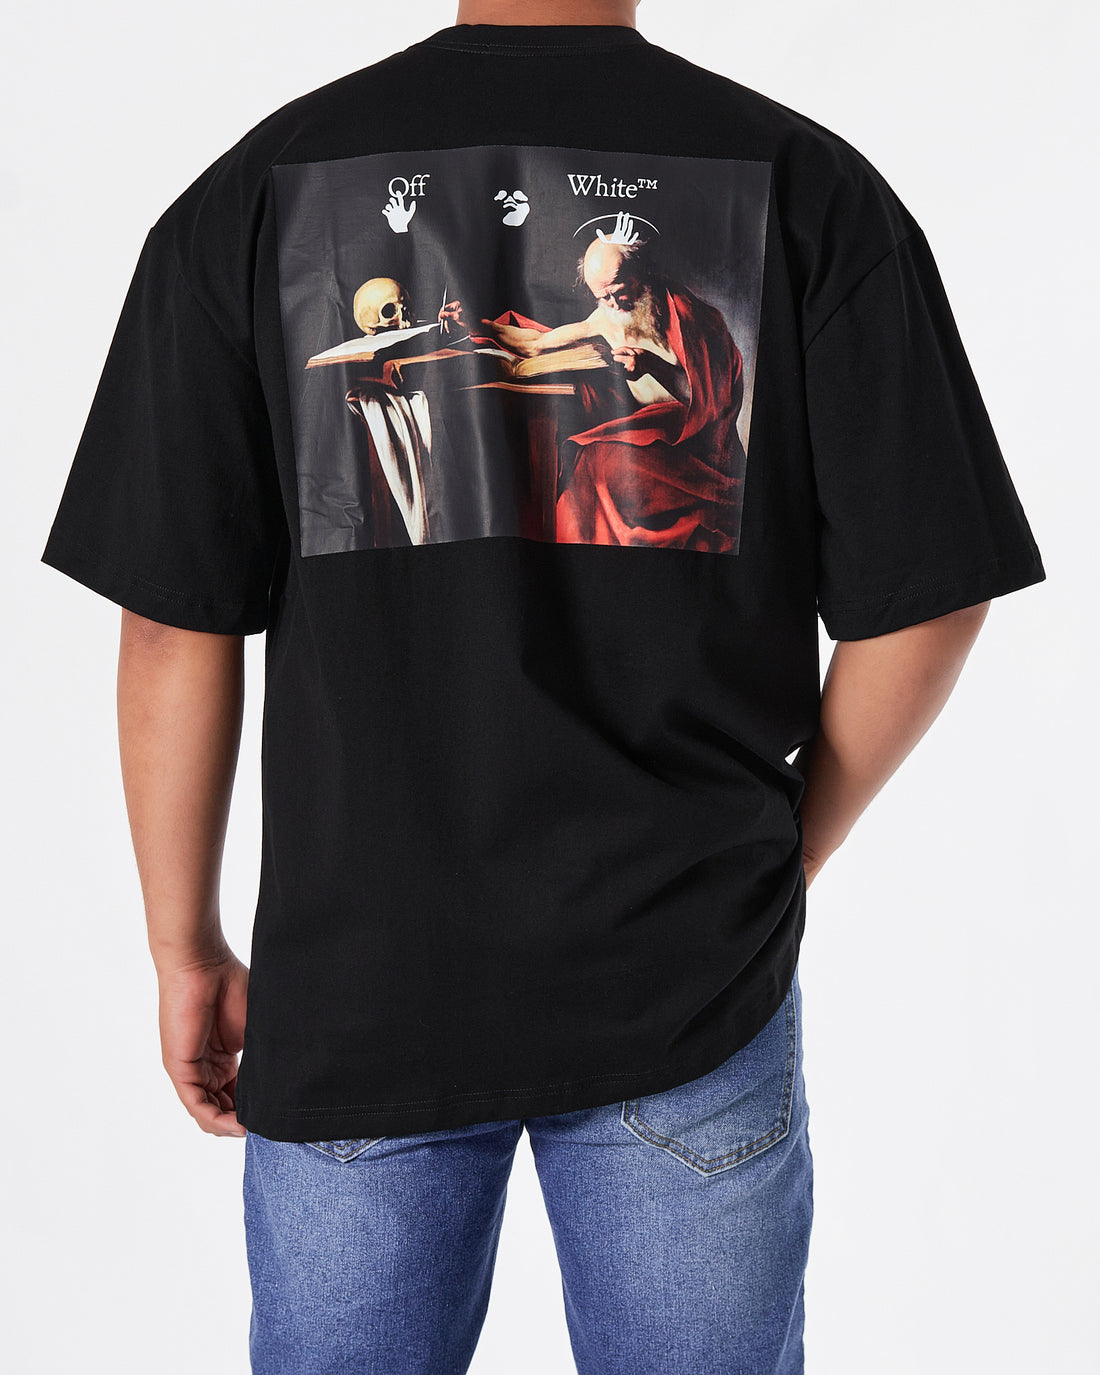 OW Caravaggio Painting Men Black T-Shirt 17.90